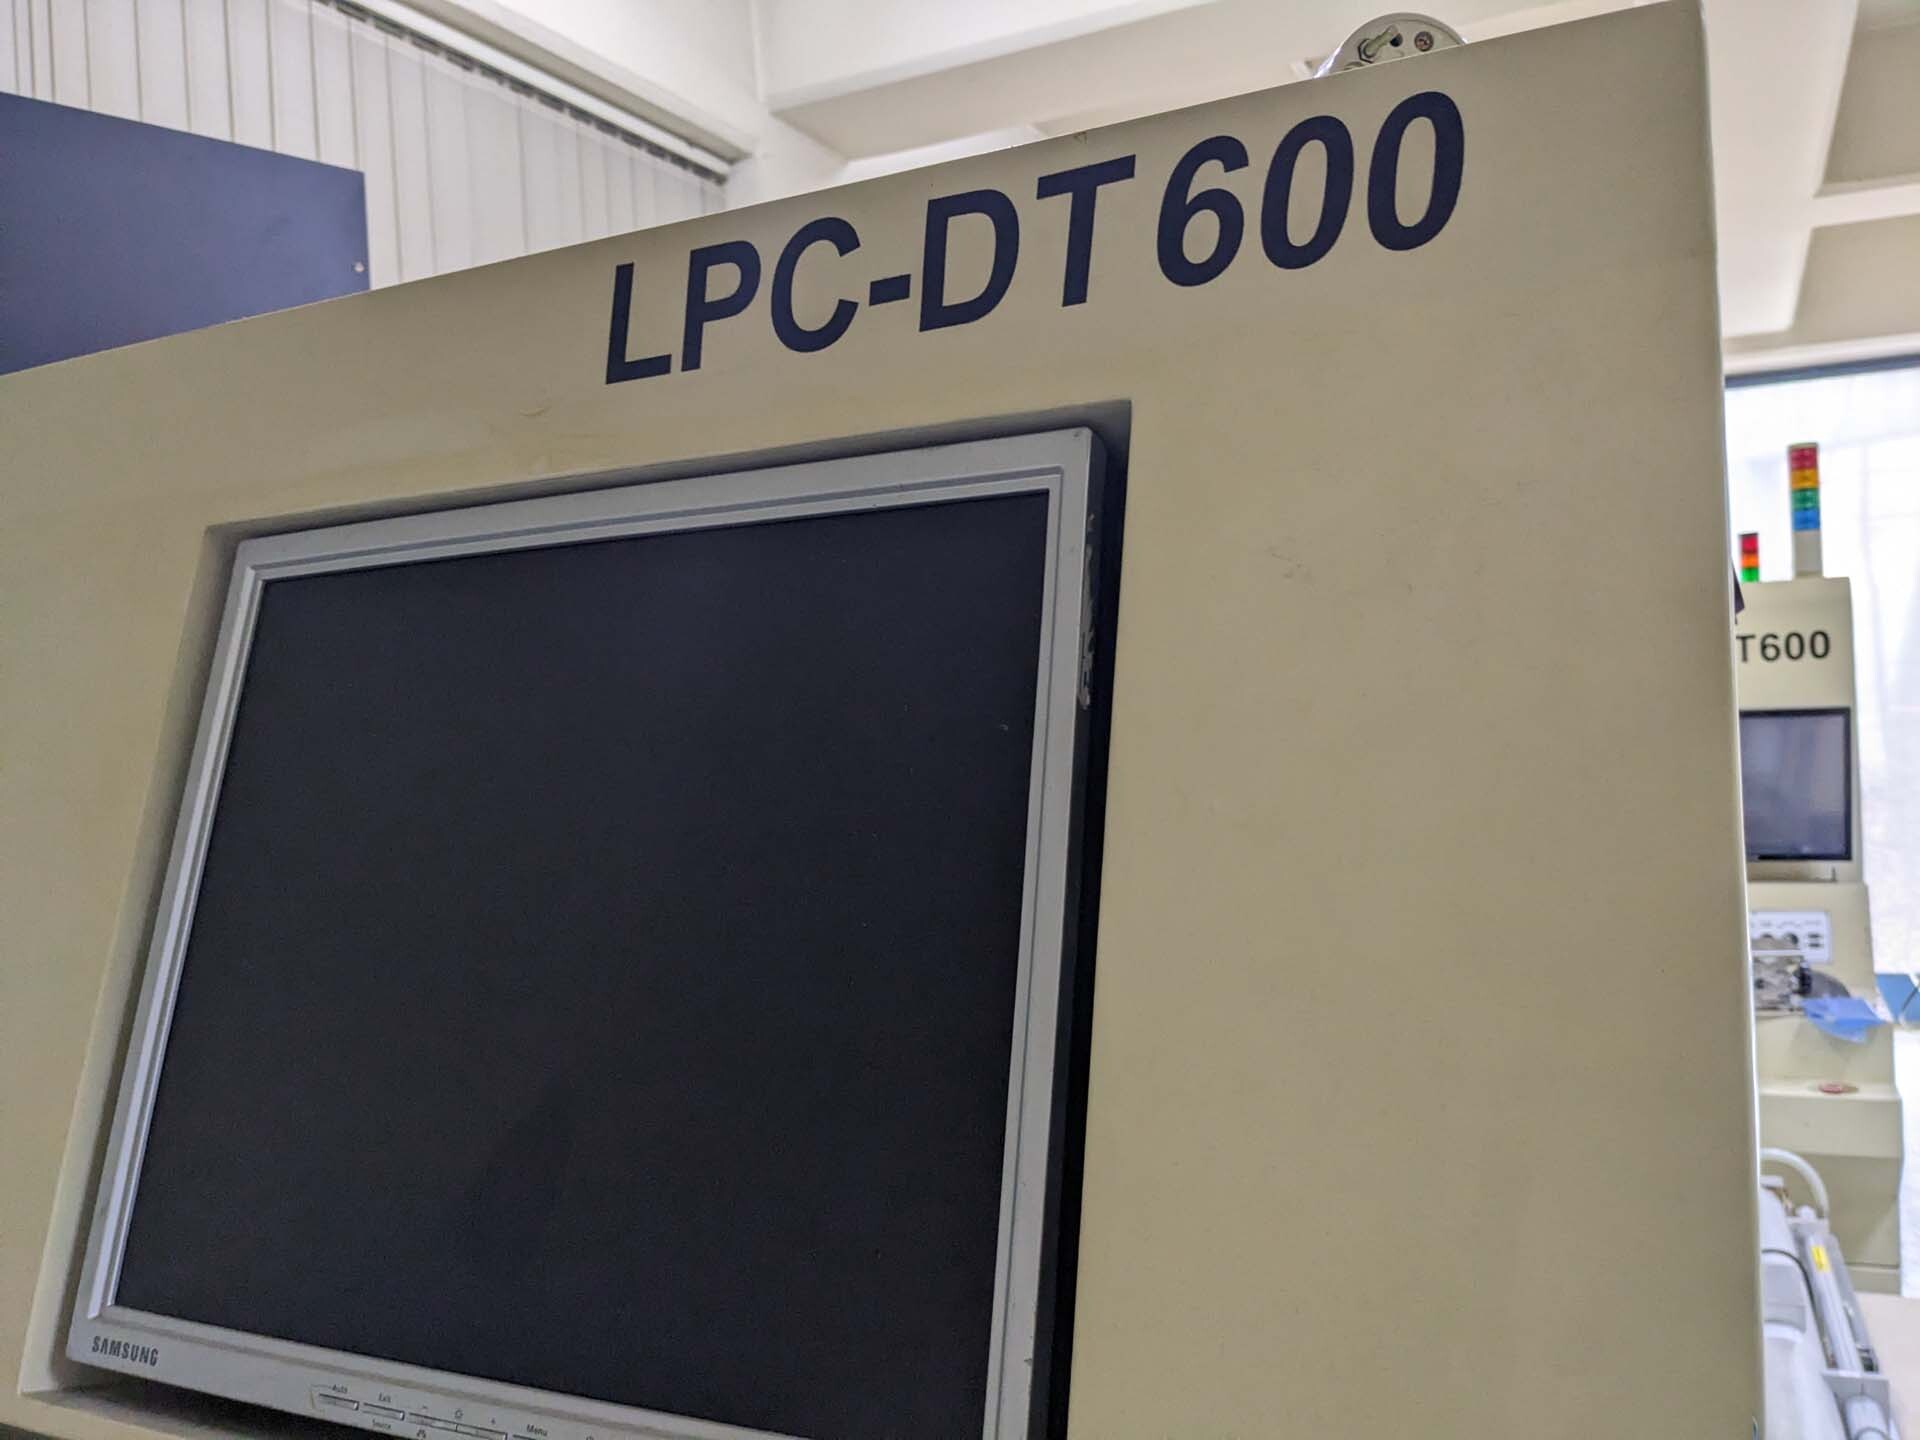 图为 已使用的 LASER AND PHYSICS LPC-DT600 待售